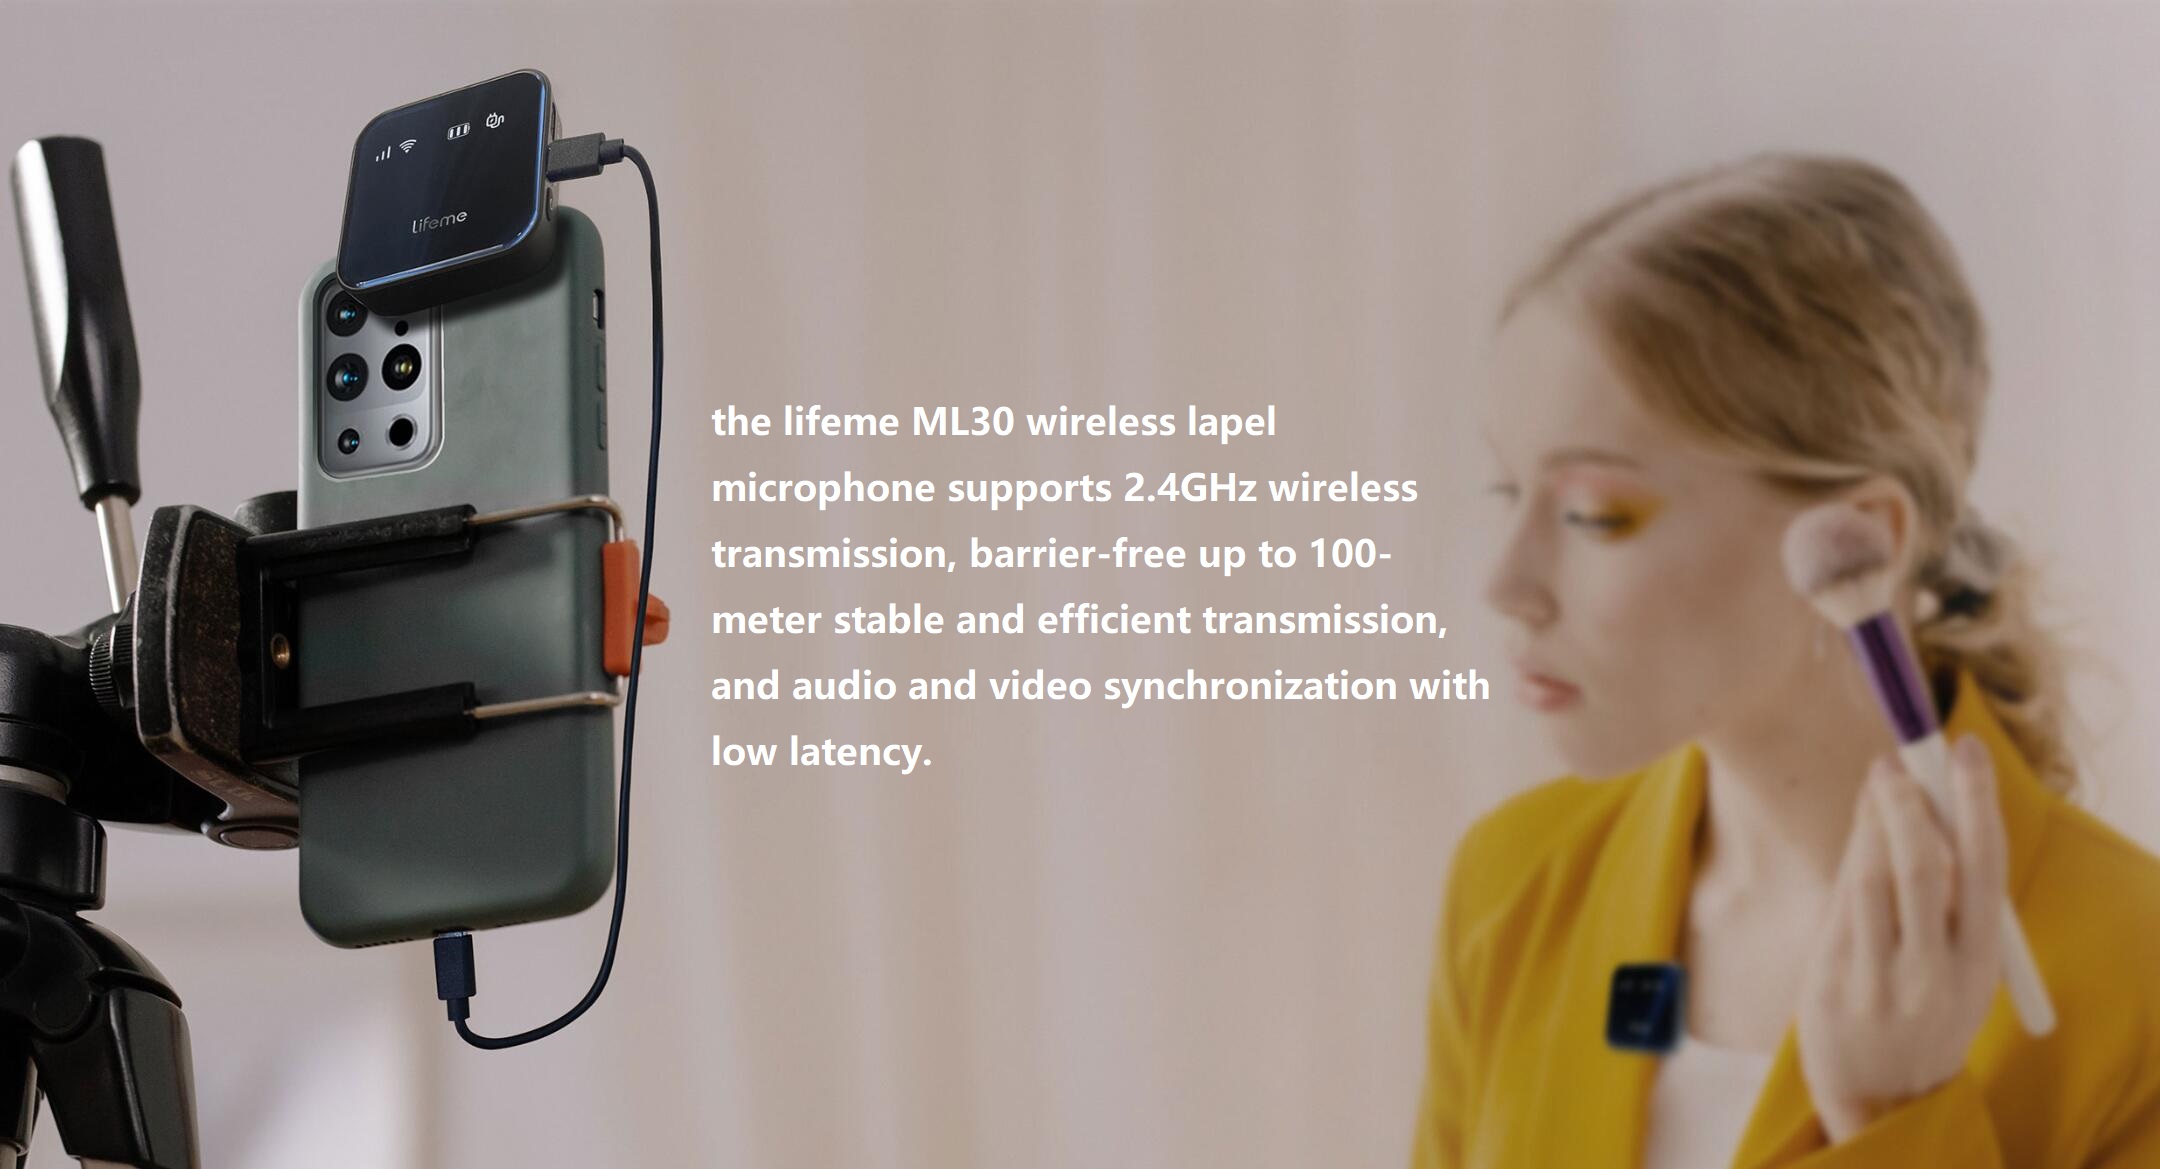 Meilan lifeme ML30 wireless lapel microphone